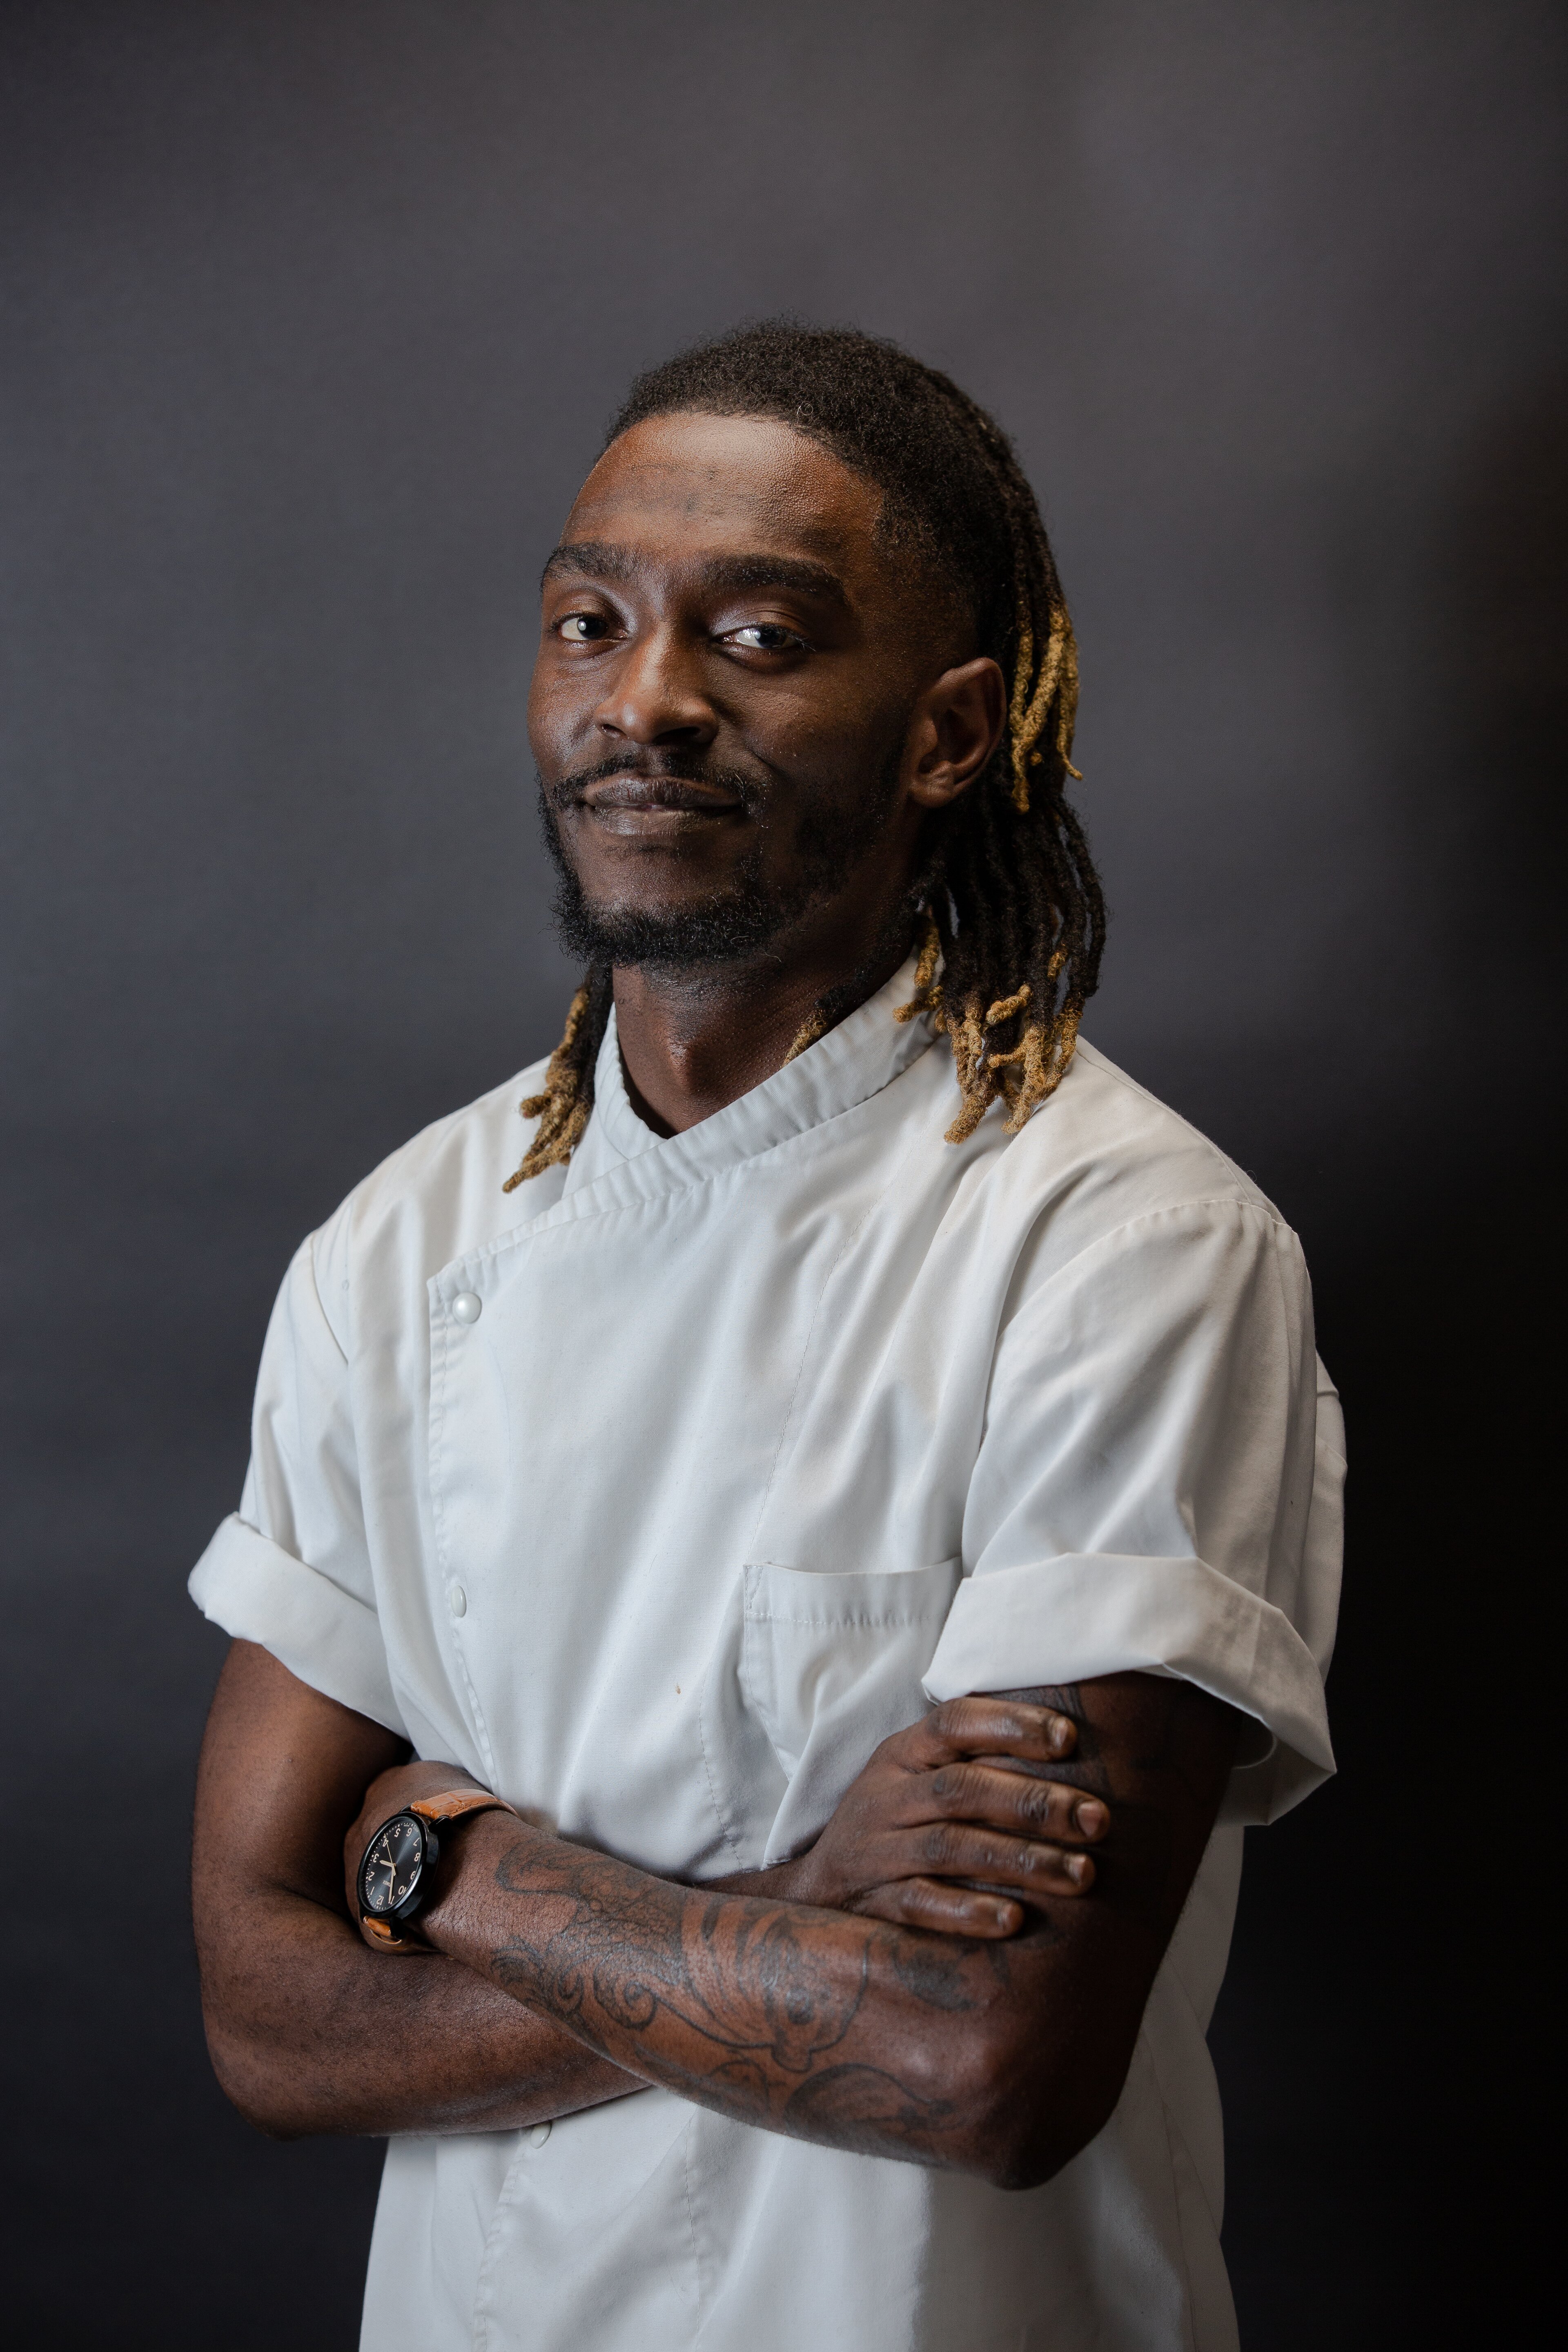 MasterChef semi-finalist to open West African restaurant in London